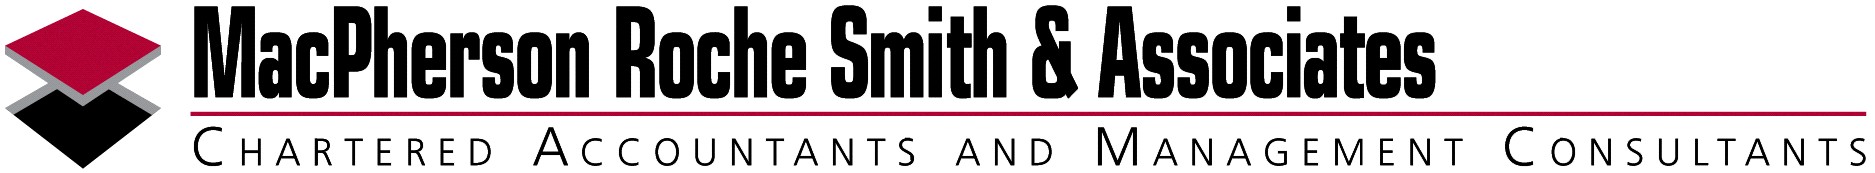 MacPherson Roche & Smith Associates